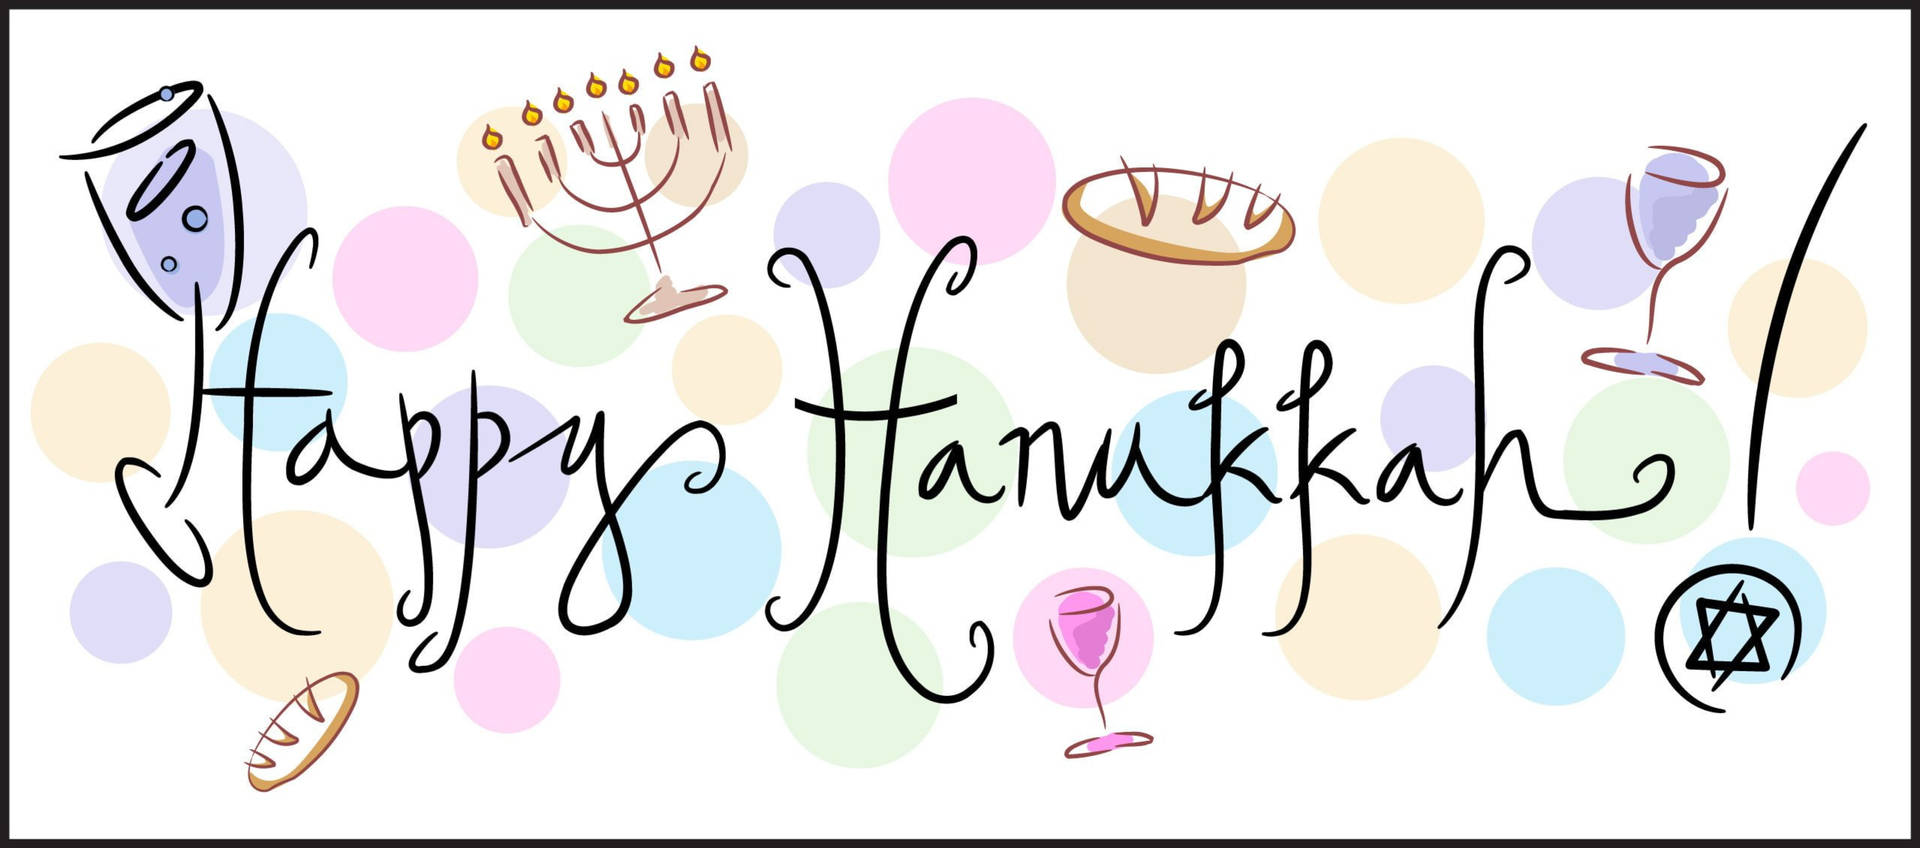 Happy Hanukkah Aesthetic Background